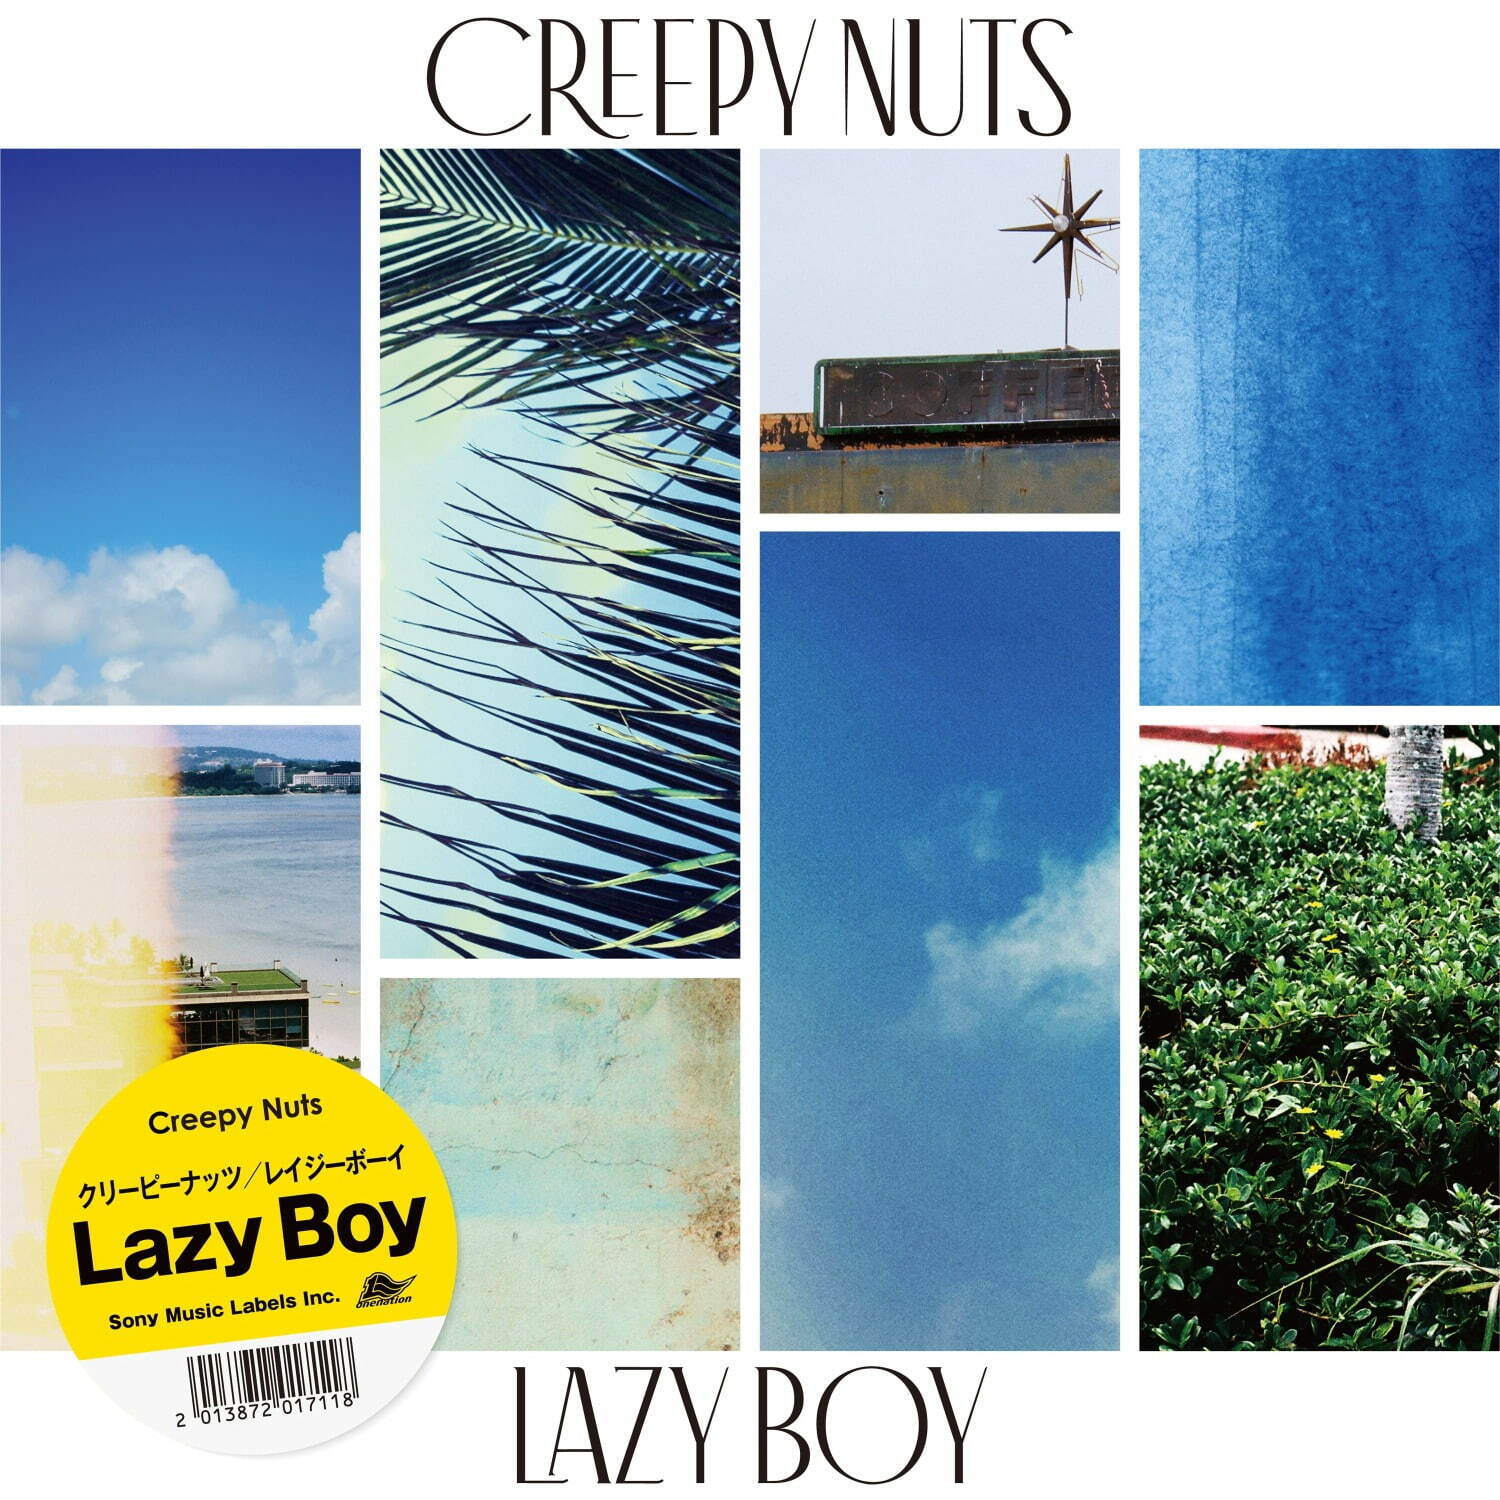 Creepy Nuts新曲「Lazy Boy」カップスターに着想“ジャスト3分”の